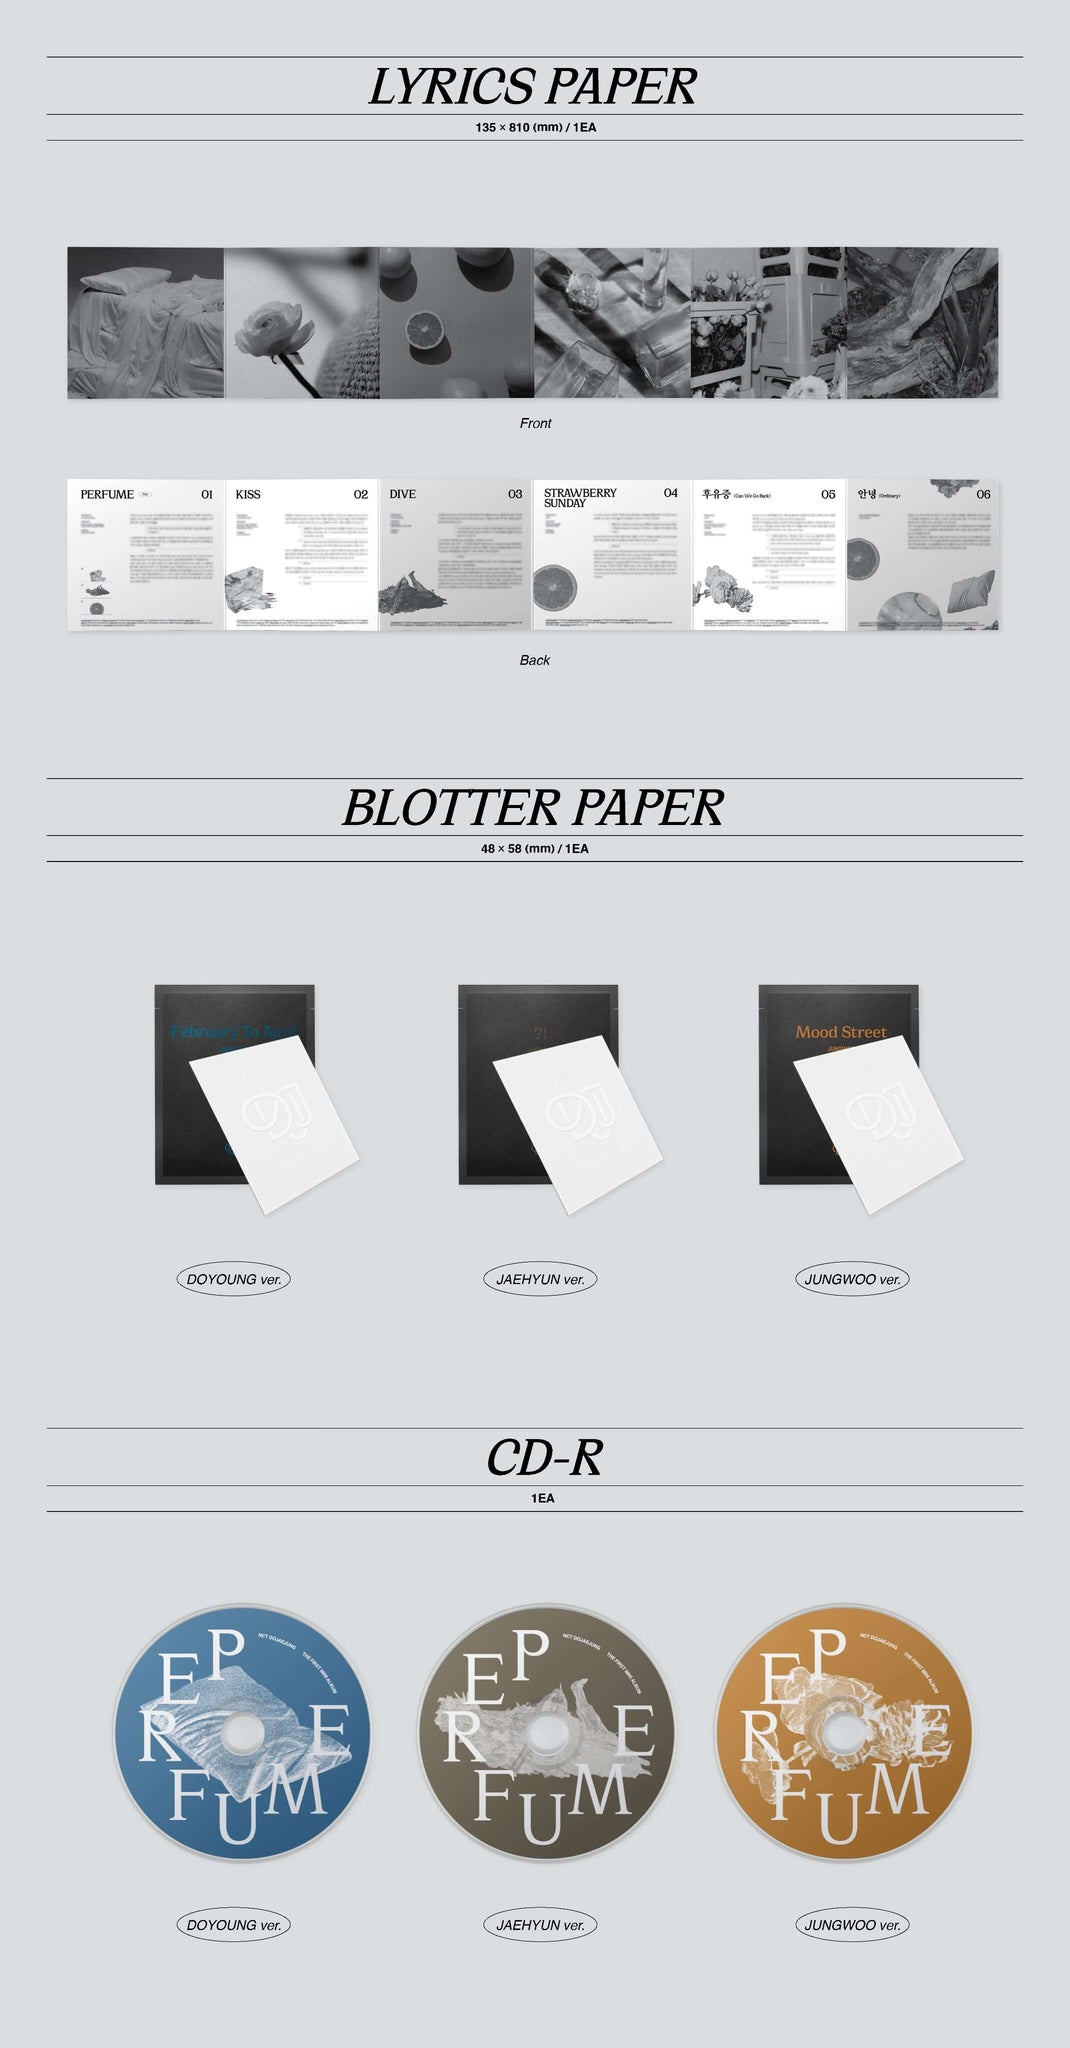 NCT DOJAEJUNG Perfume - Box Version Inclusions Lyrics Paper Blotter Paper CD